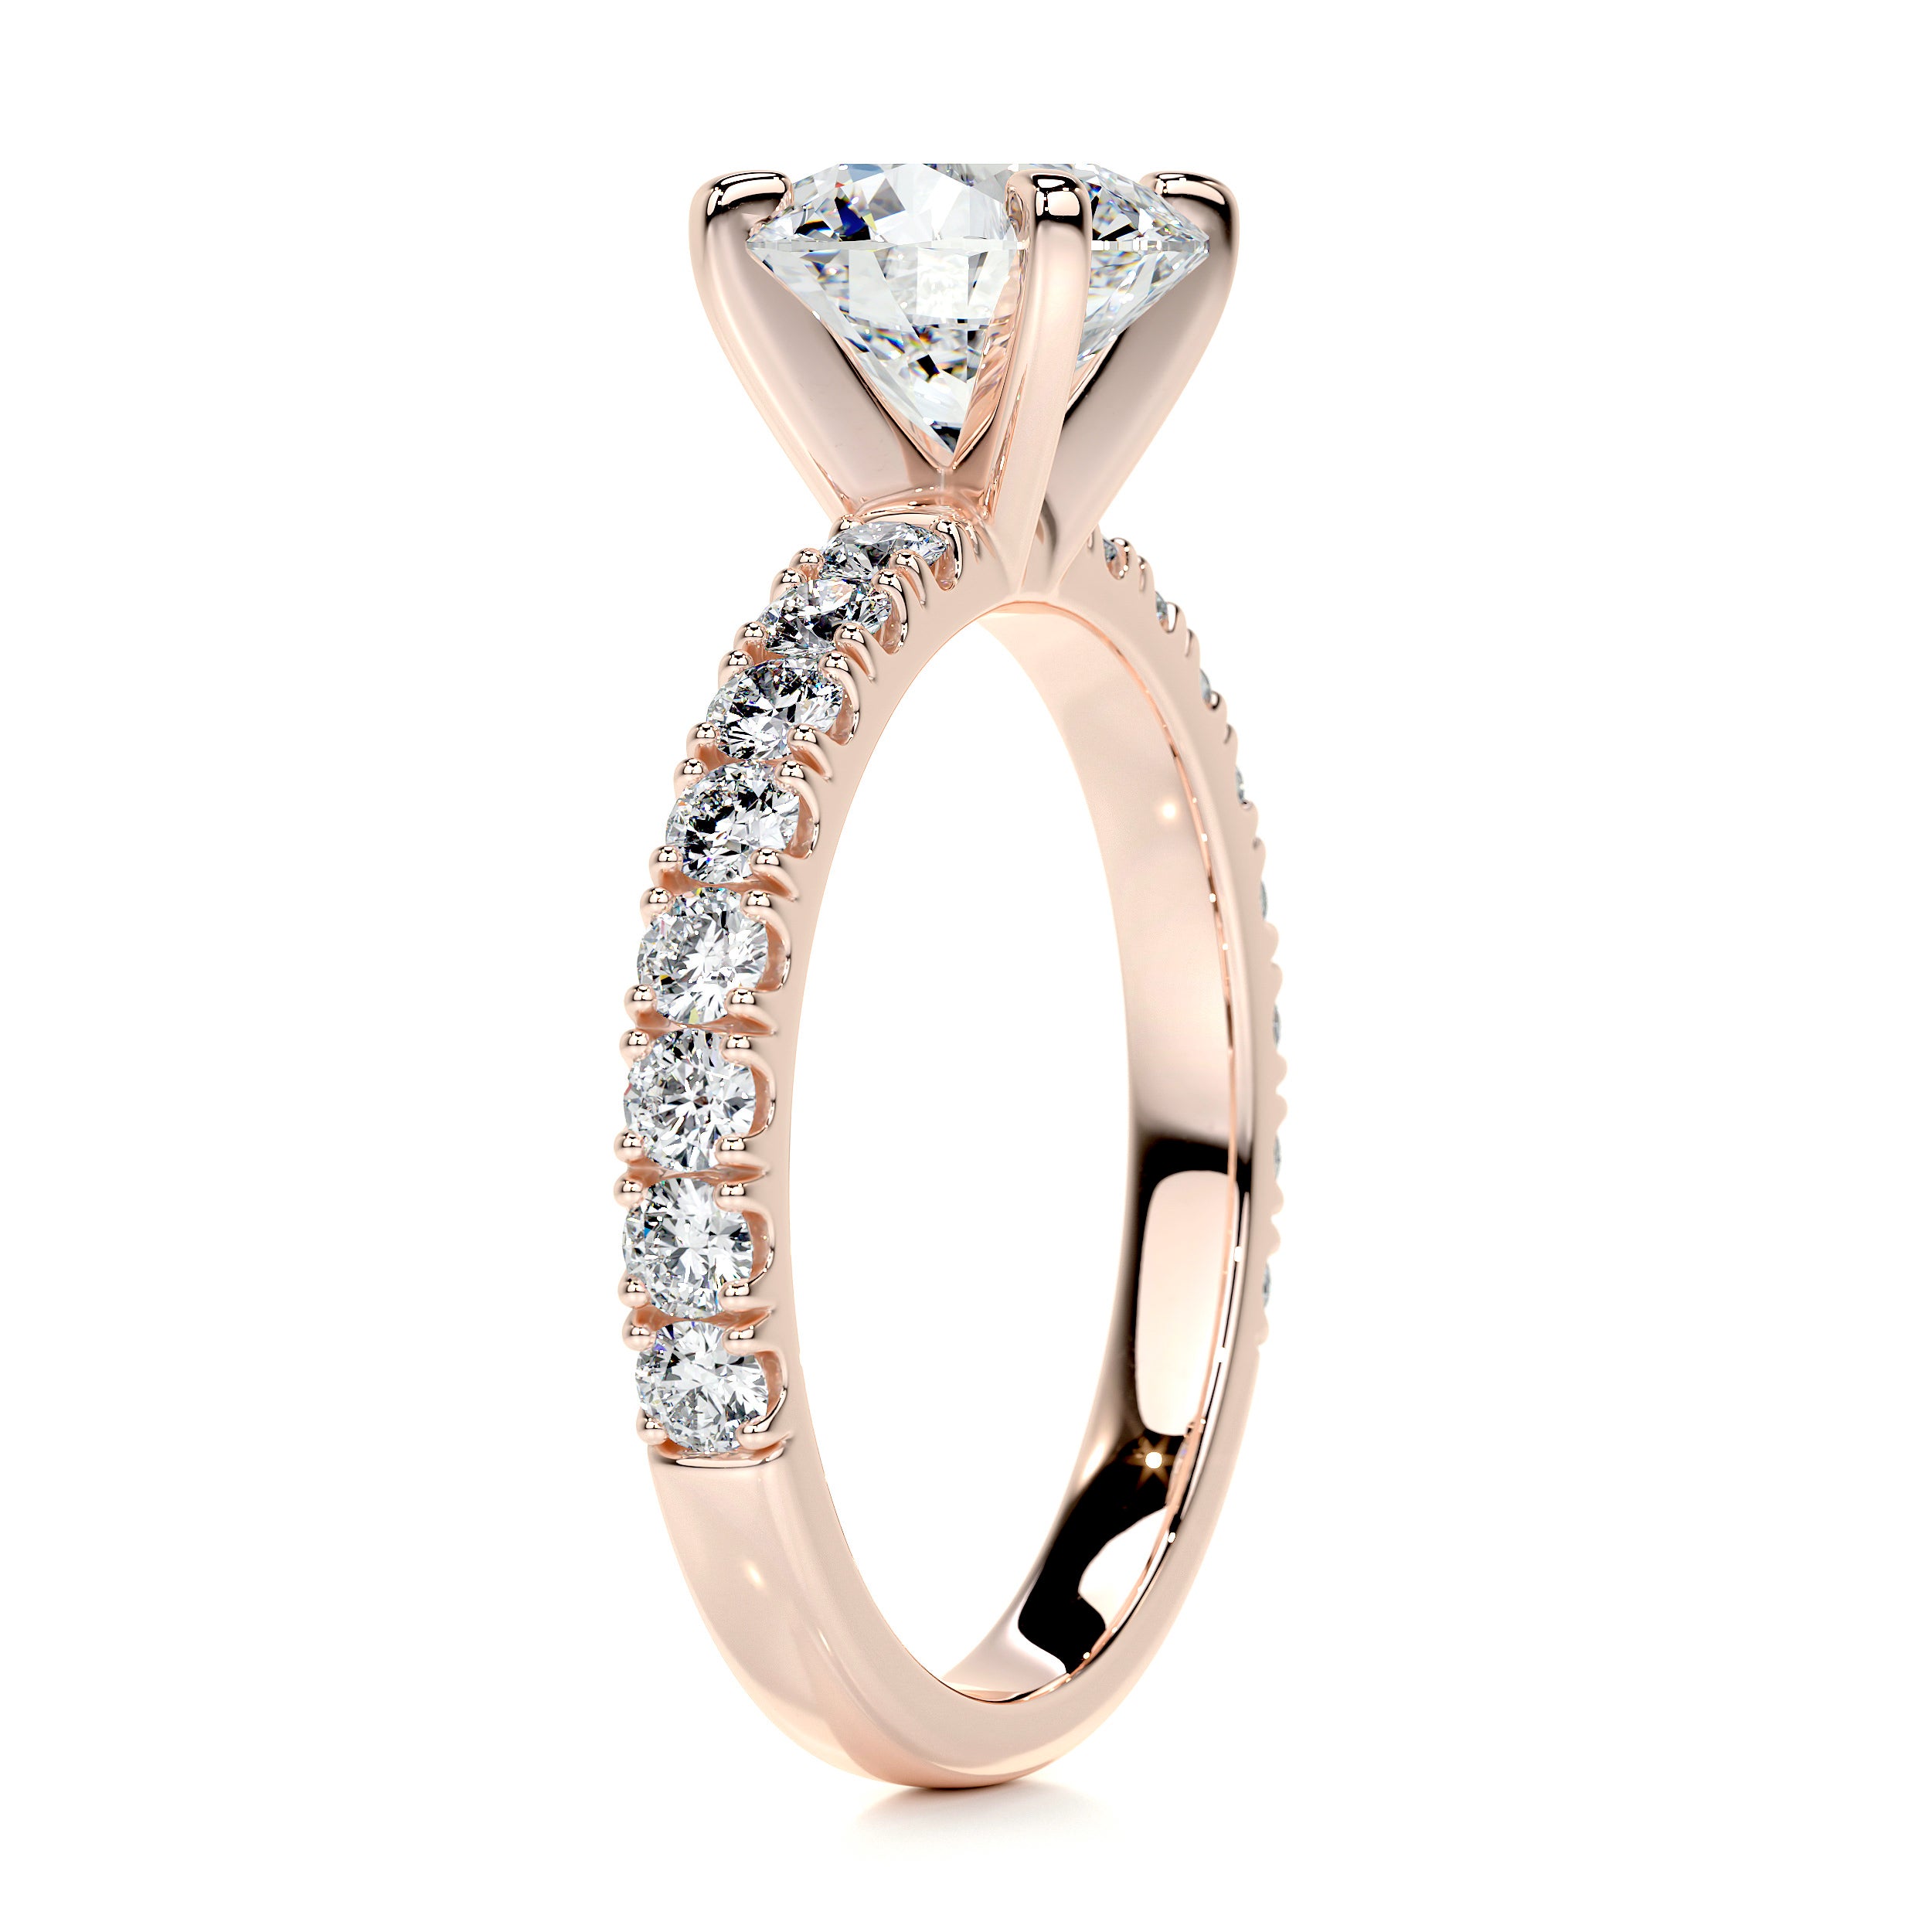 Alison Diamond Engagement Ring -14K Rose Gold